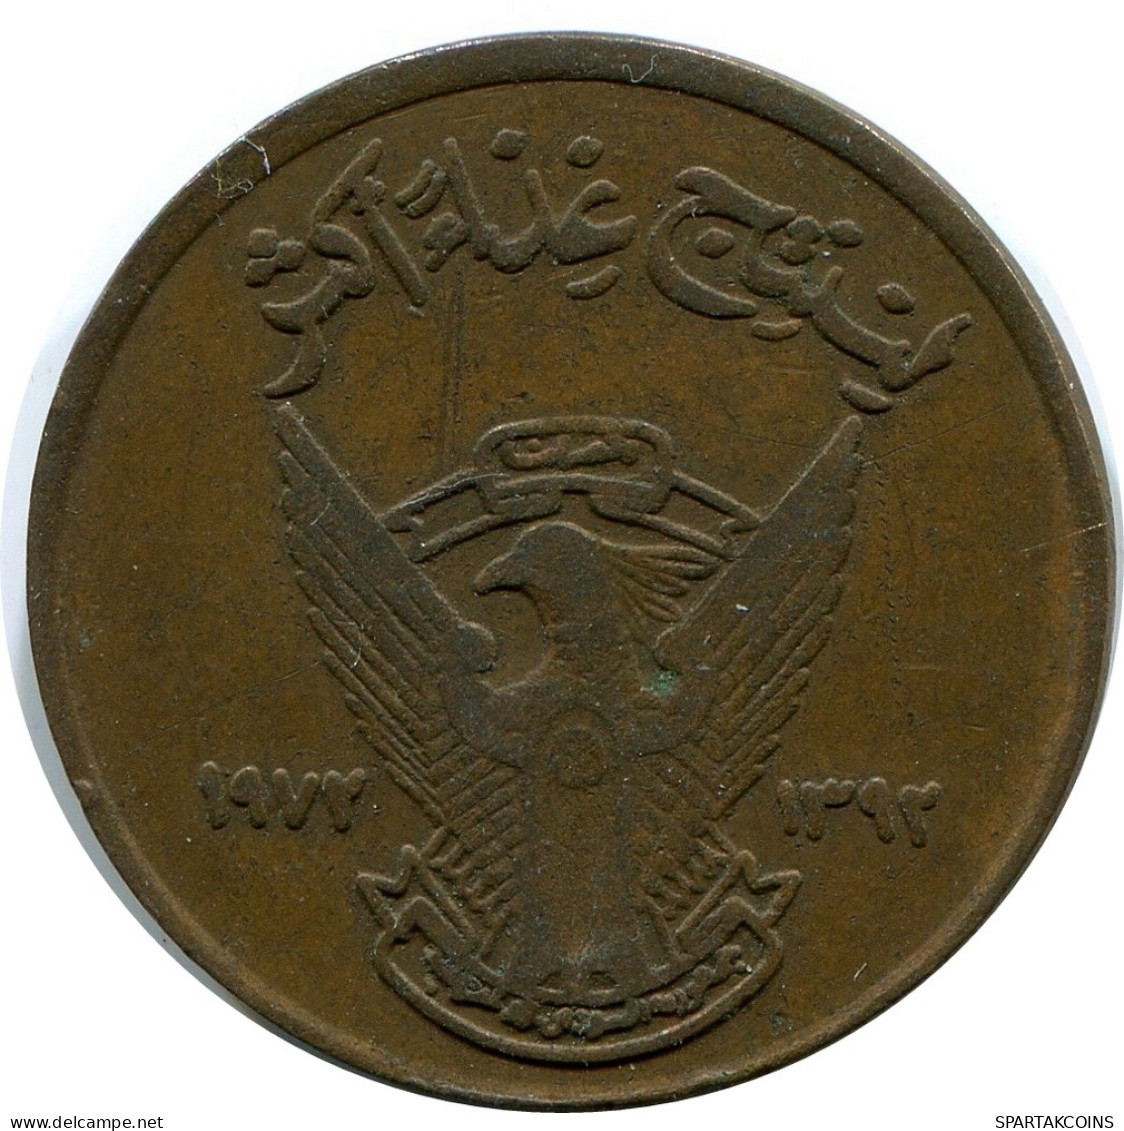 5 MILLIEMES 1392 (1972) SUDÁN SUDAN FAO Moneda #AK244.E - Soedan